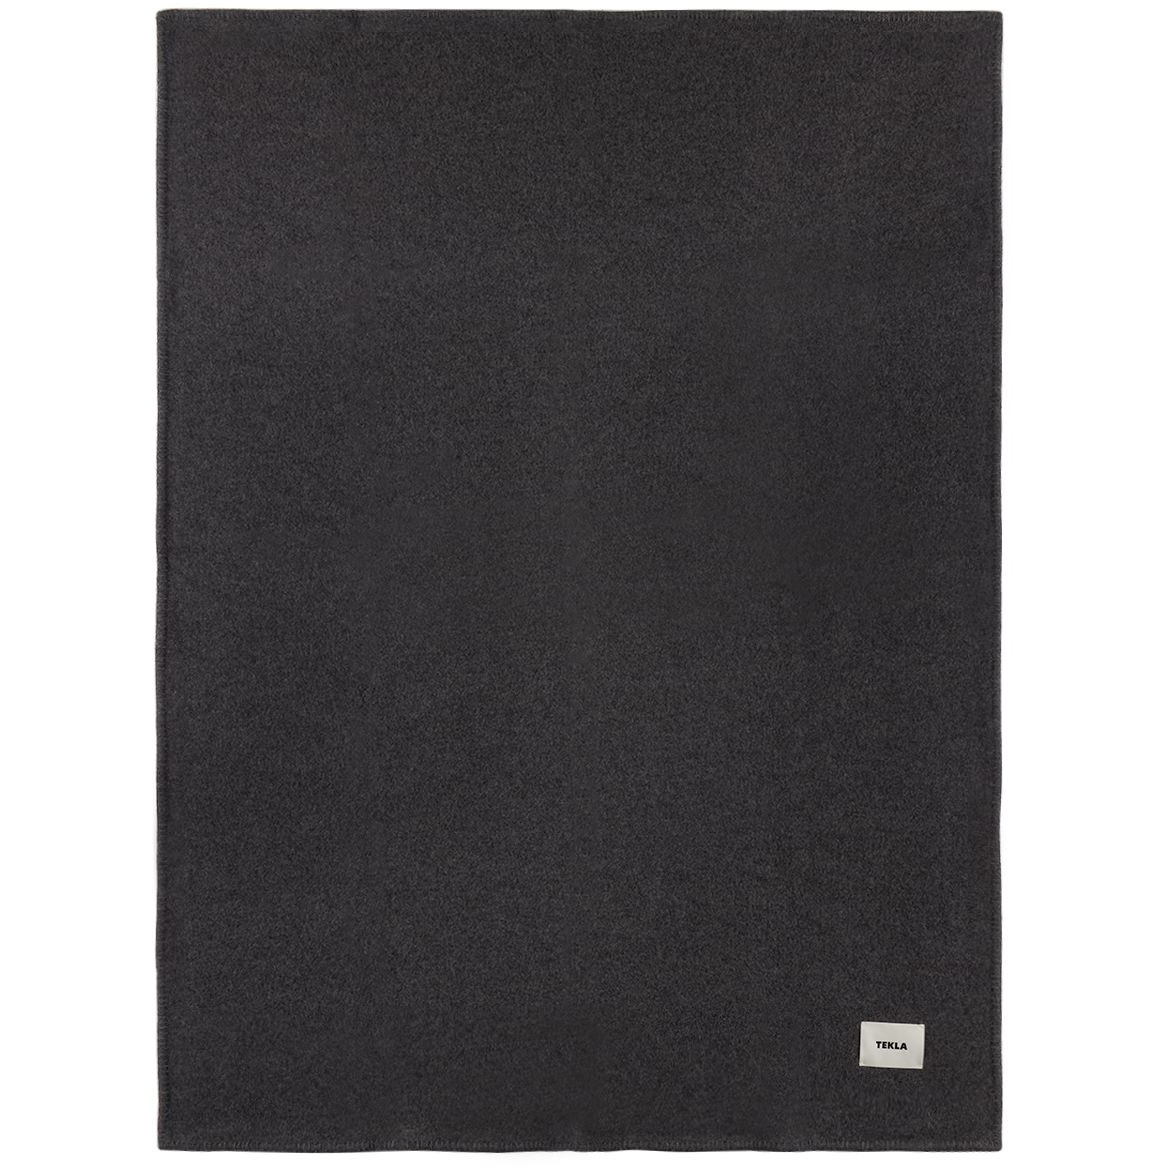 Tekla Gray Pure Wool Blanket - image 1